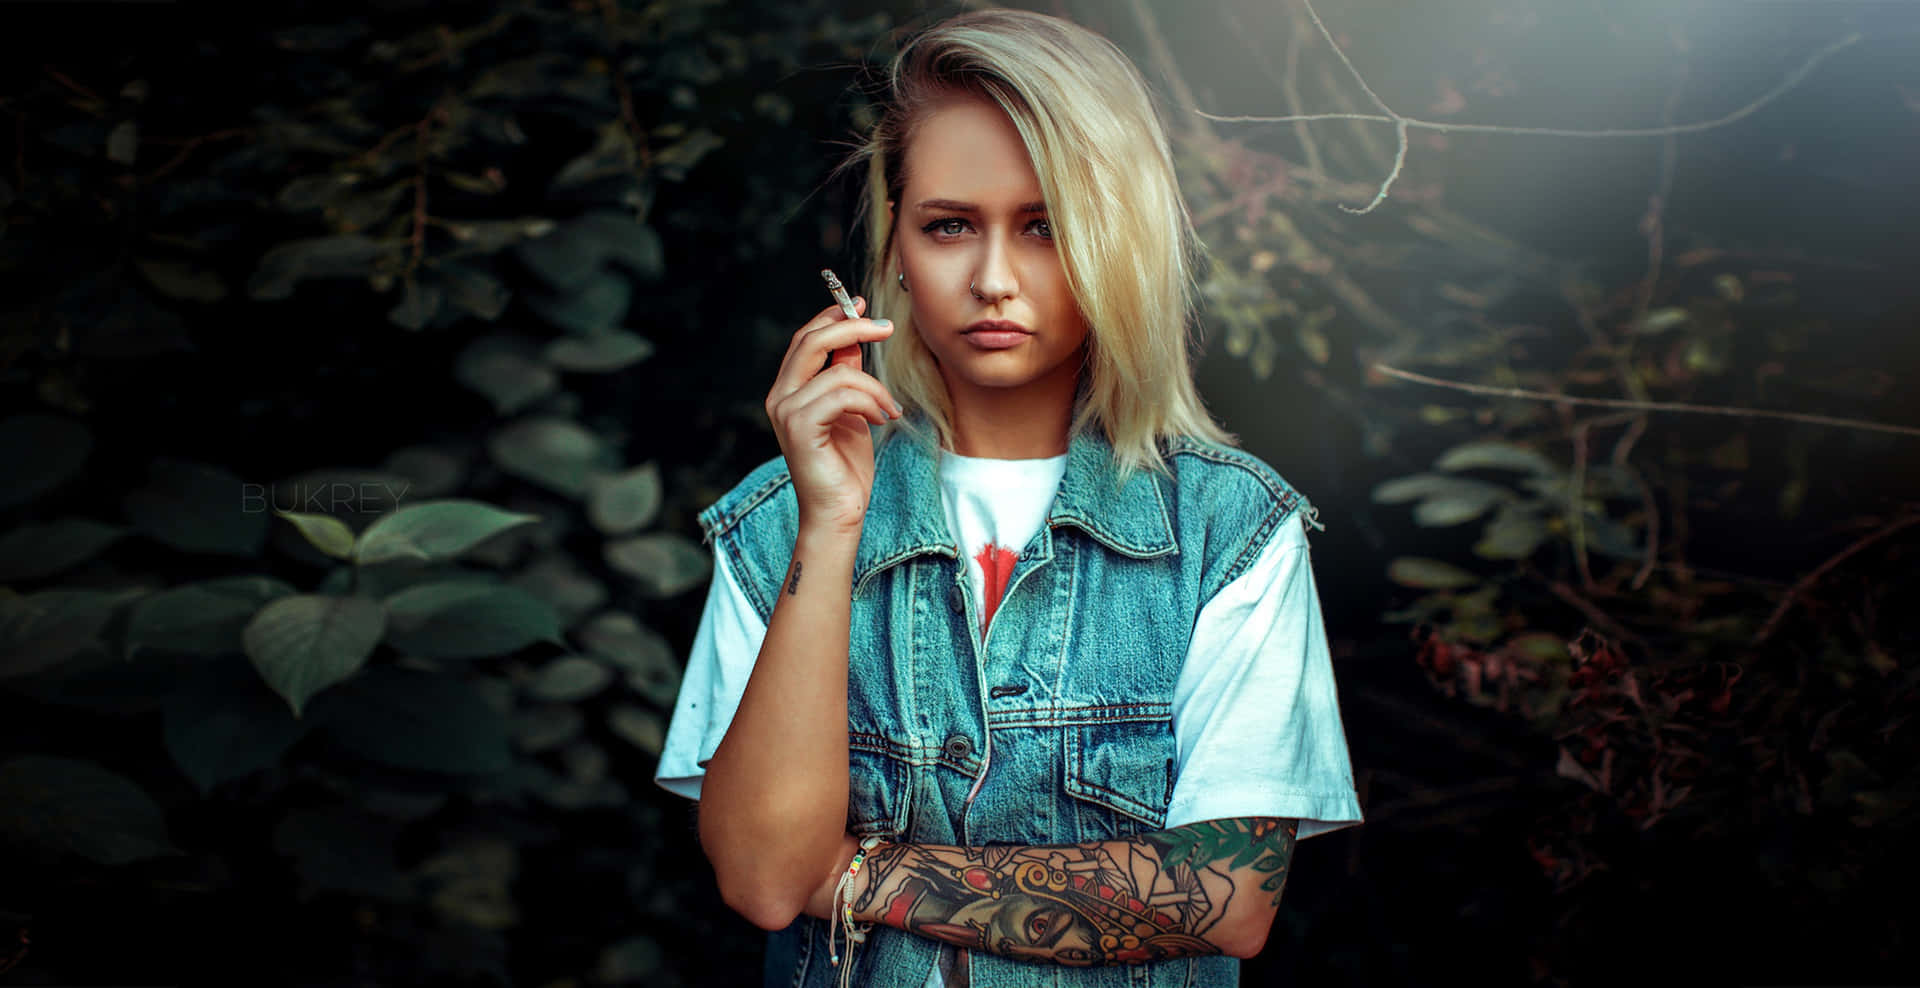 Tattooed Blonde Girl Smoking Background